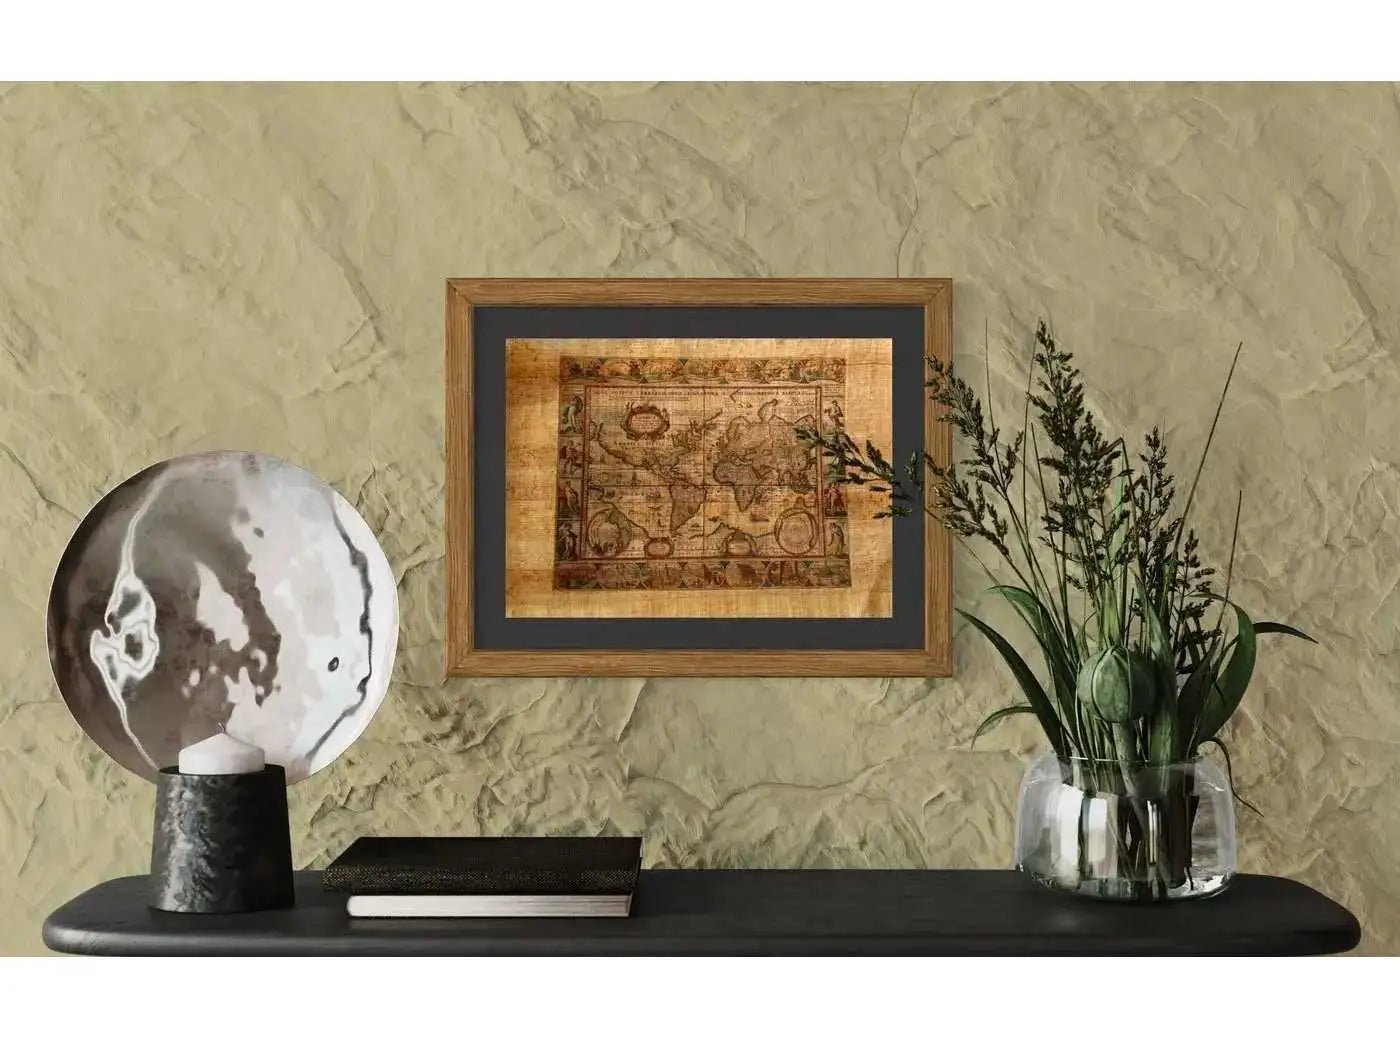 Nova Totius Terrarum Orbis Geographica Ac Hydrographica Tabula Vintage 17th Century World Ancient Map Illustration Wall Art